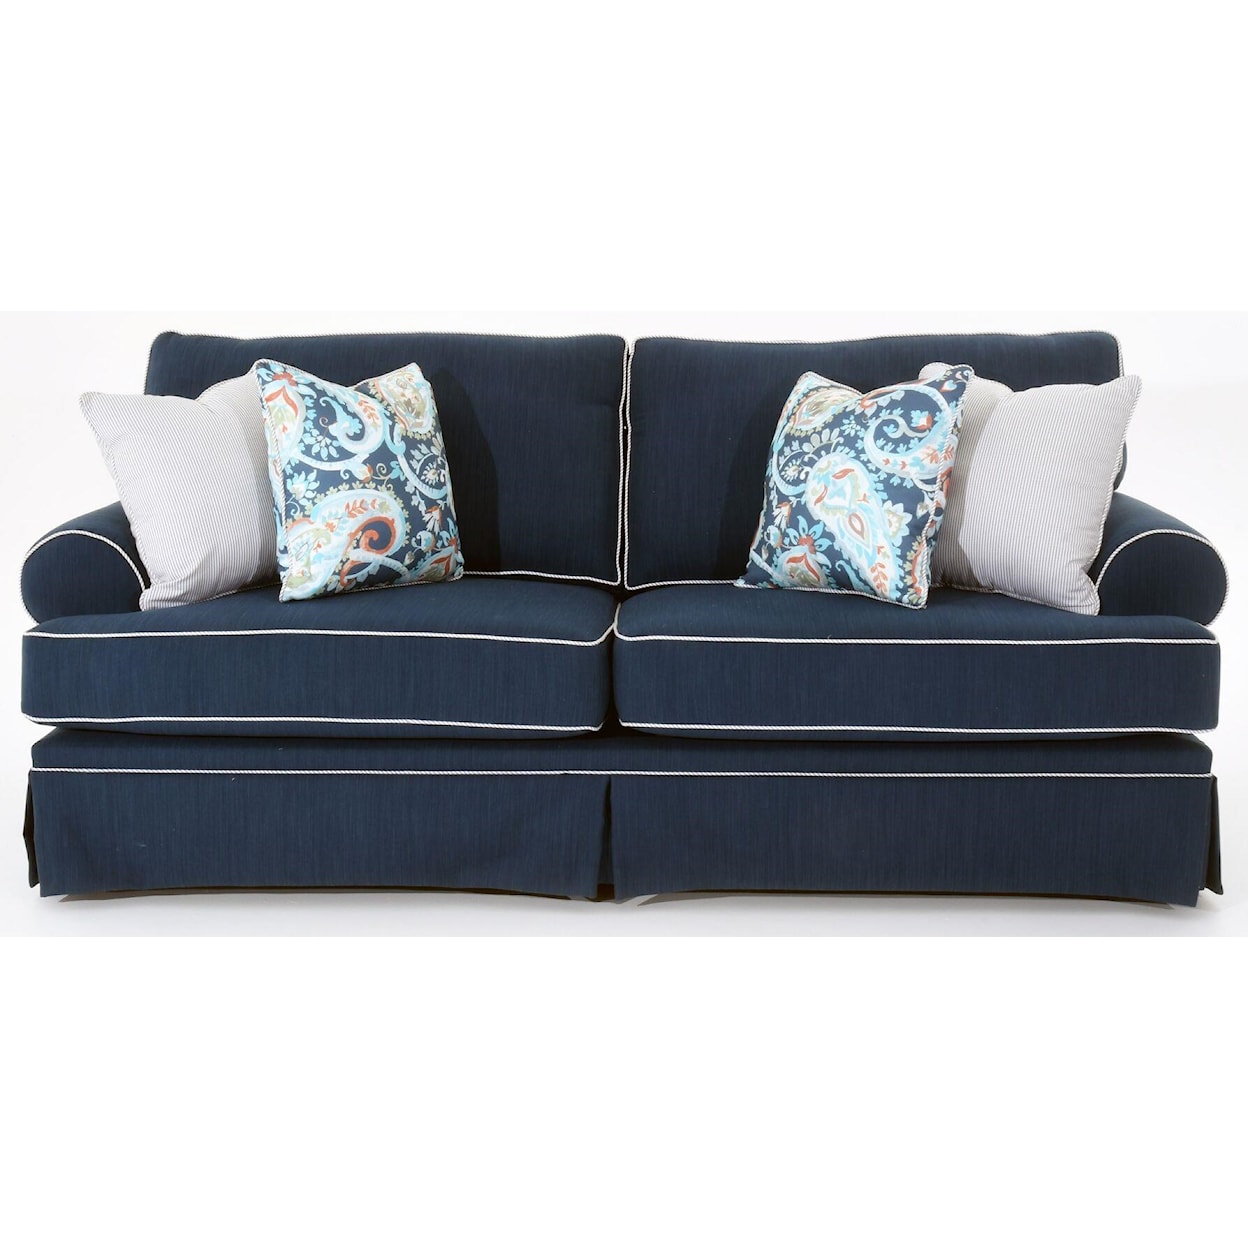 Stone & Leigh Furniture Emily Queen Sleeper Sofa